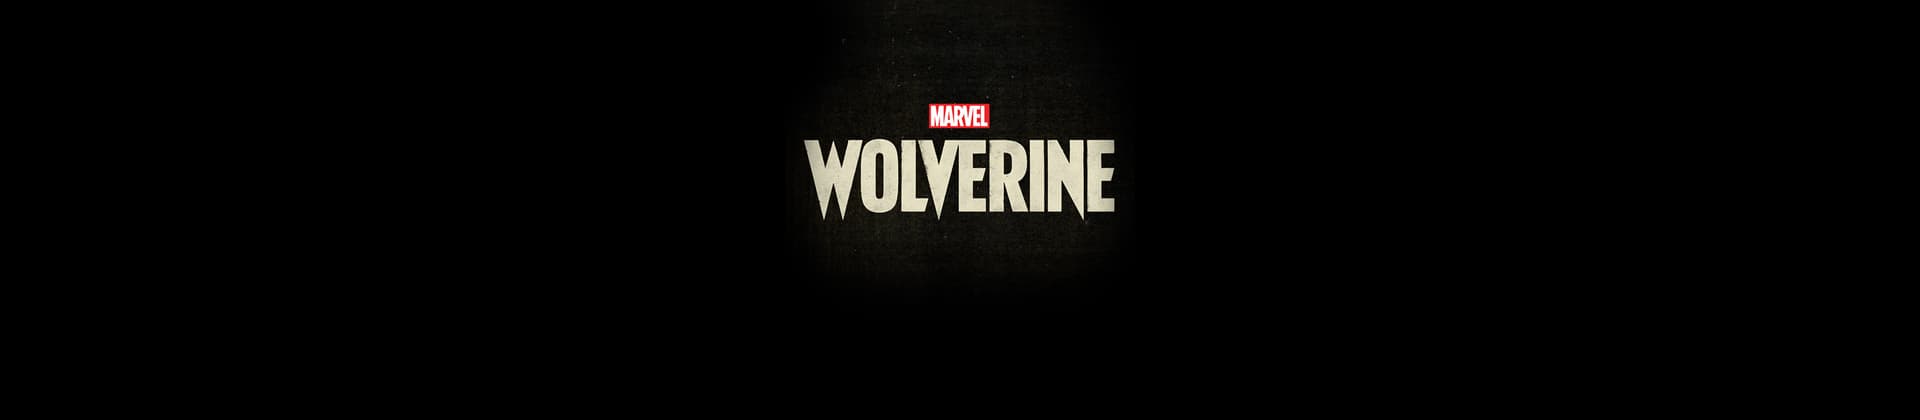 Marvel's Wolverine Game Logo on Black